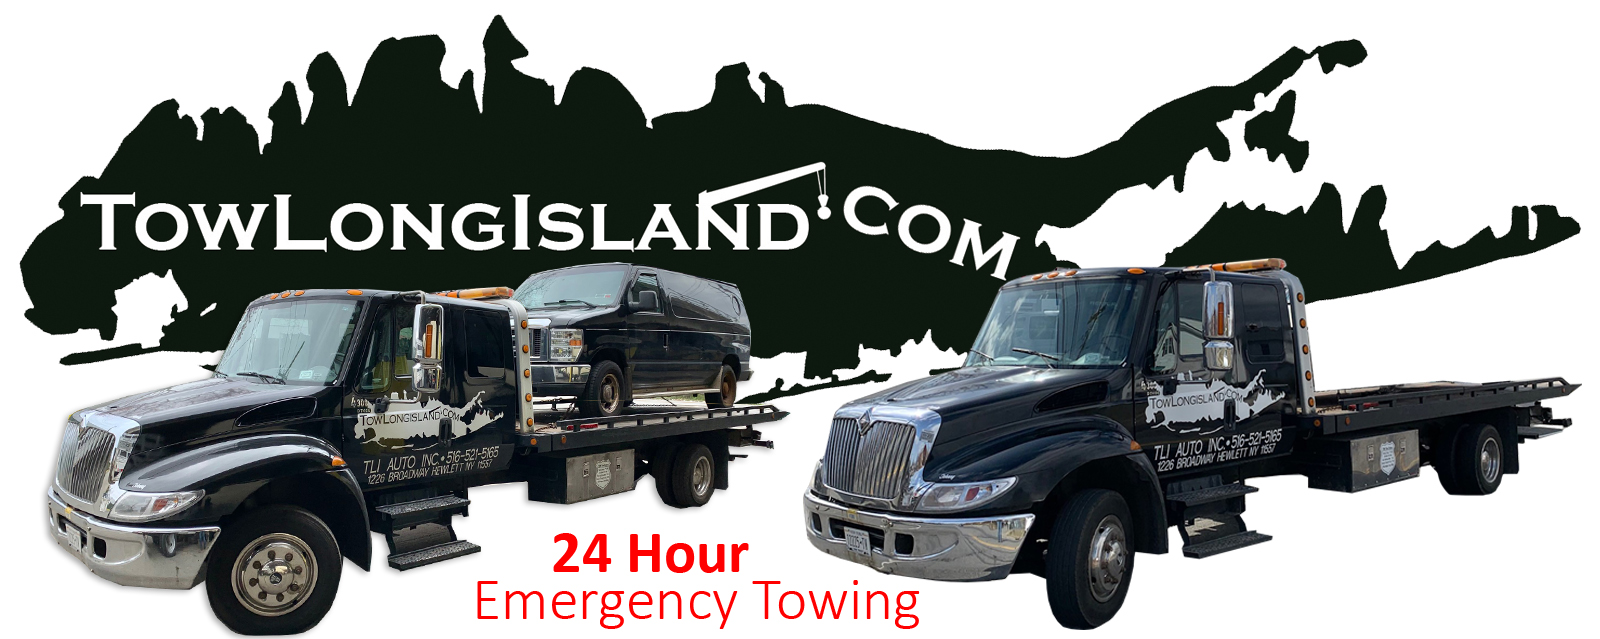 24 Hour Towing Service | Uniondale, Long Island, Nassau County, New York | TowLongIsland.com 516.521.5165